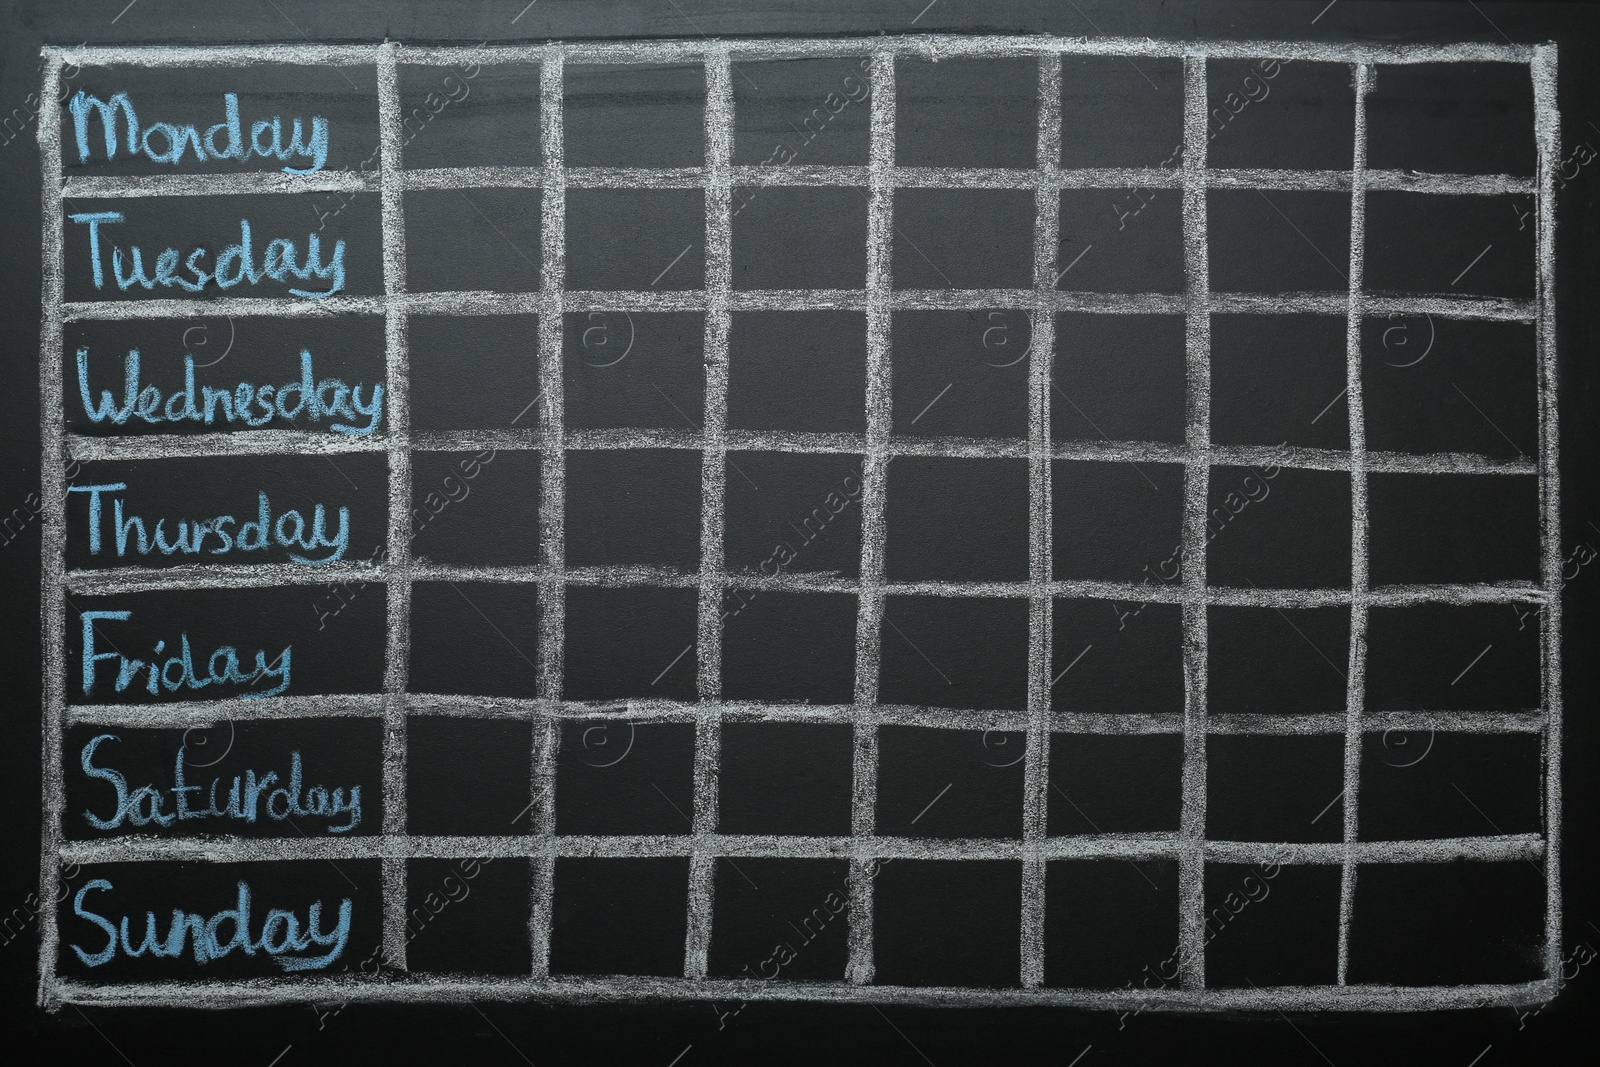 Photo of Weekly school timetable drawn on black chalkboard